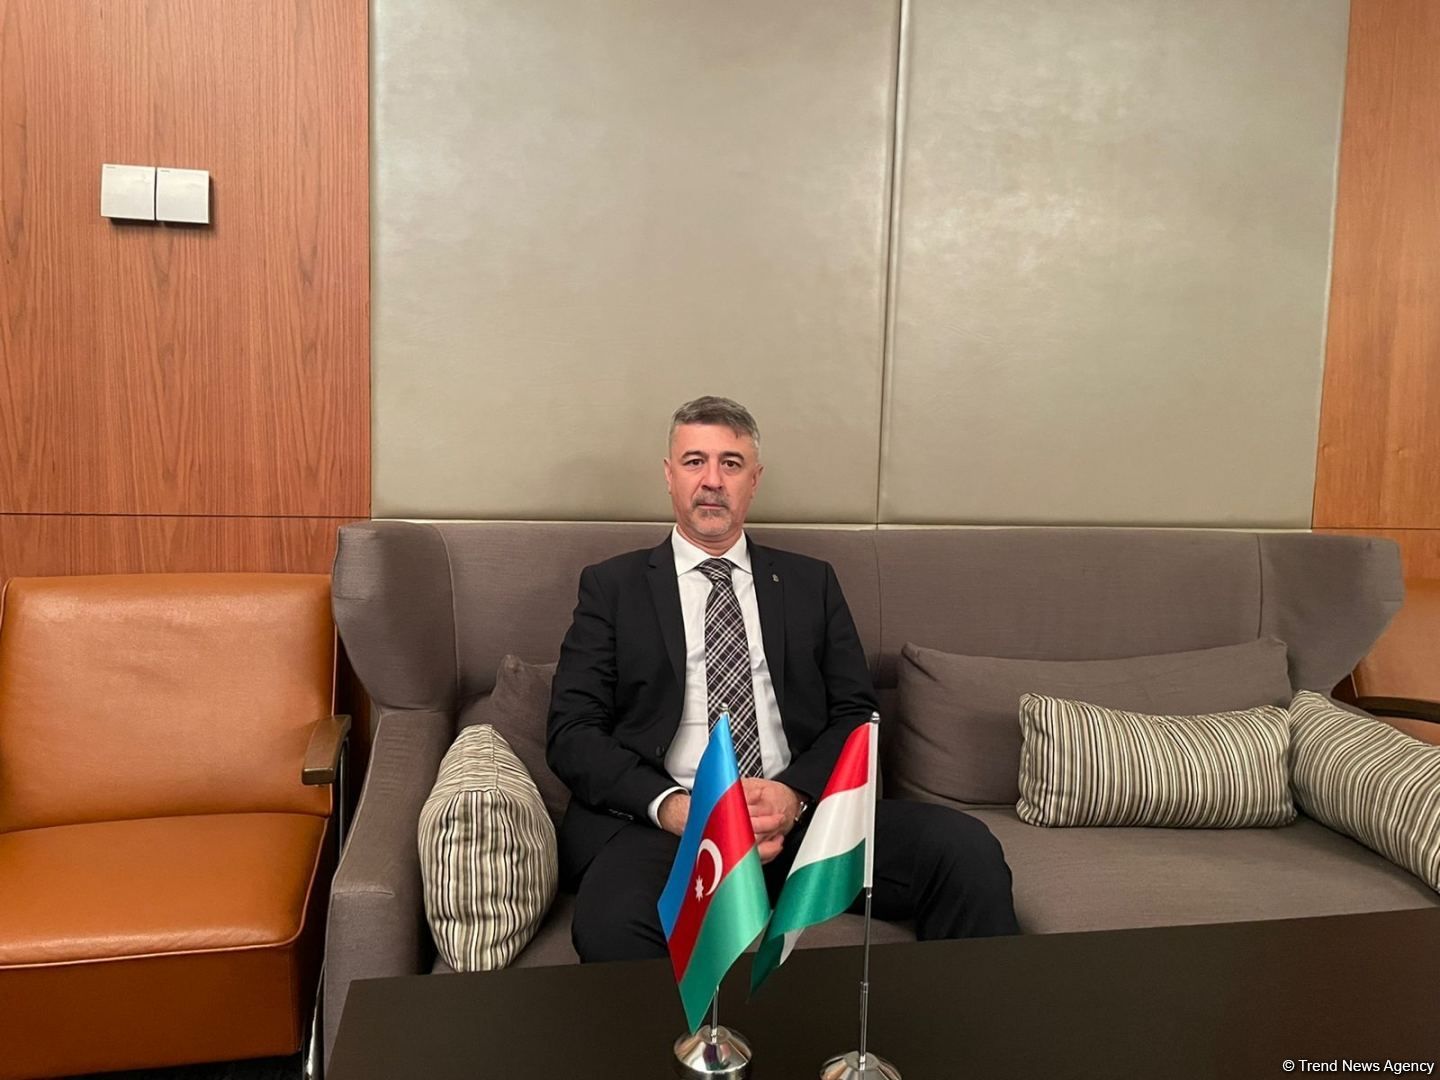 Hungarian companies start negotiations on gas imports from Azerbaijan - Ambassador [PHOTO]